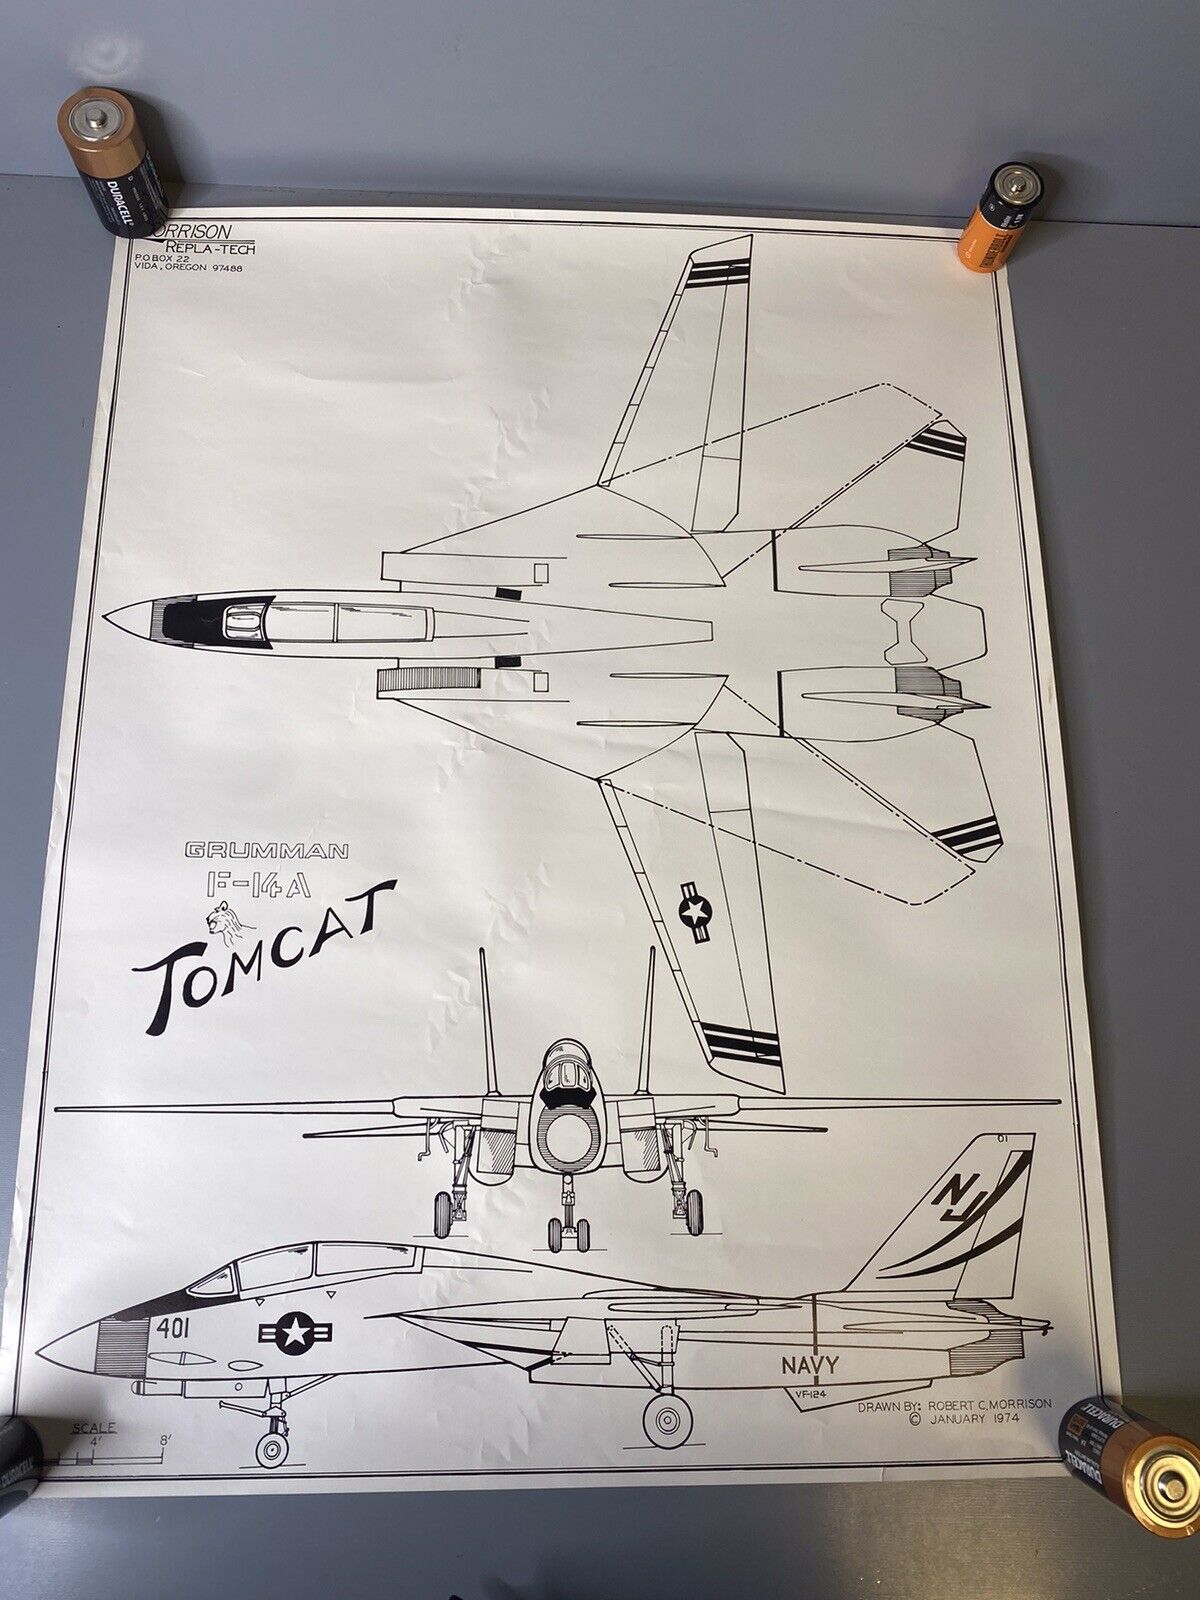 F-14A TOMCAT Aircraft Print by Robert C. Morrison 1974